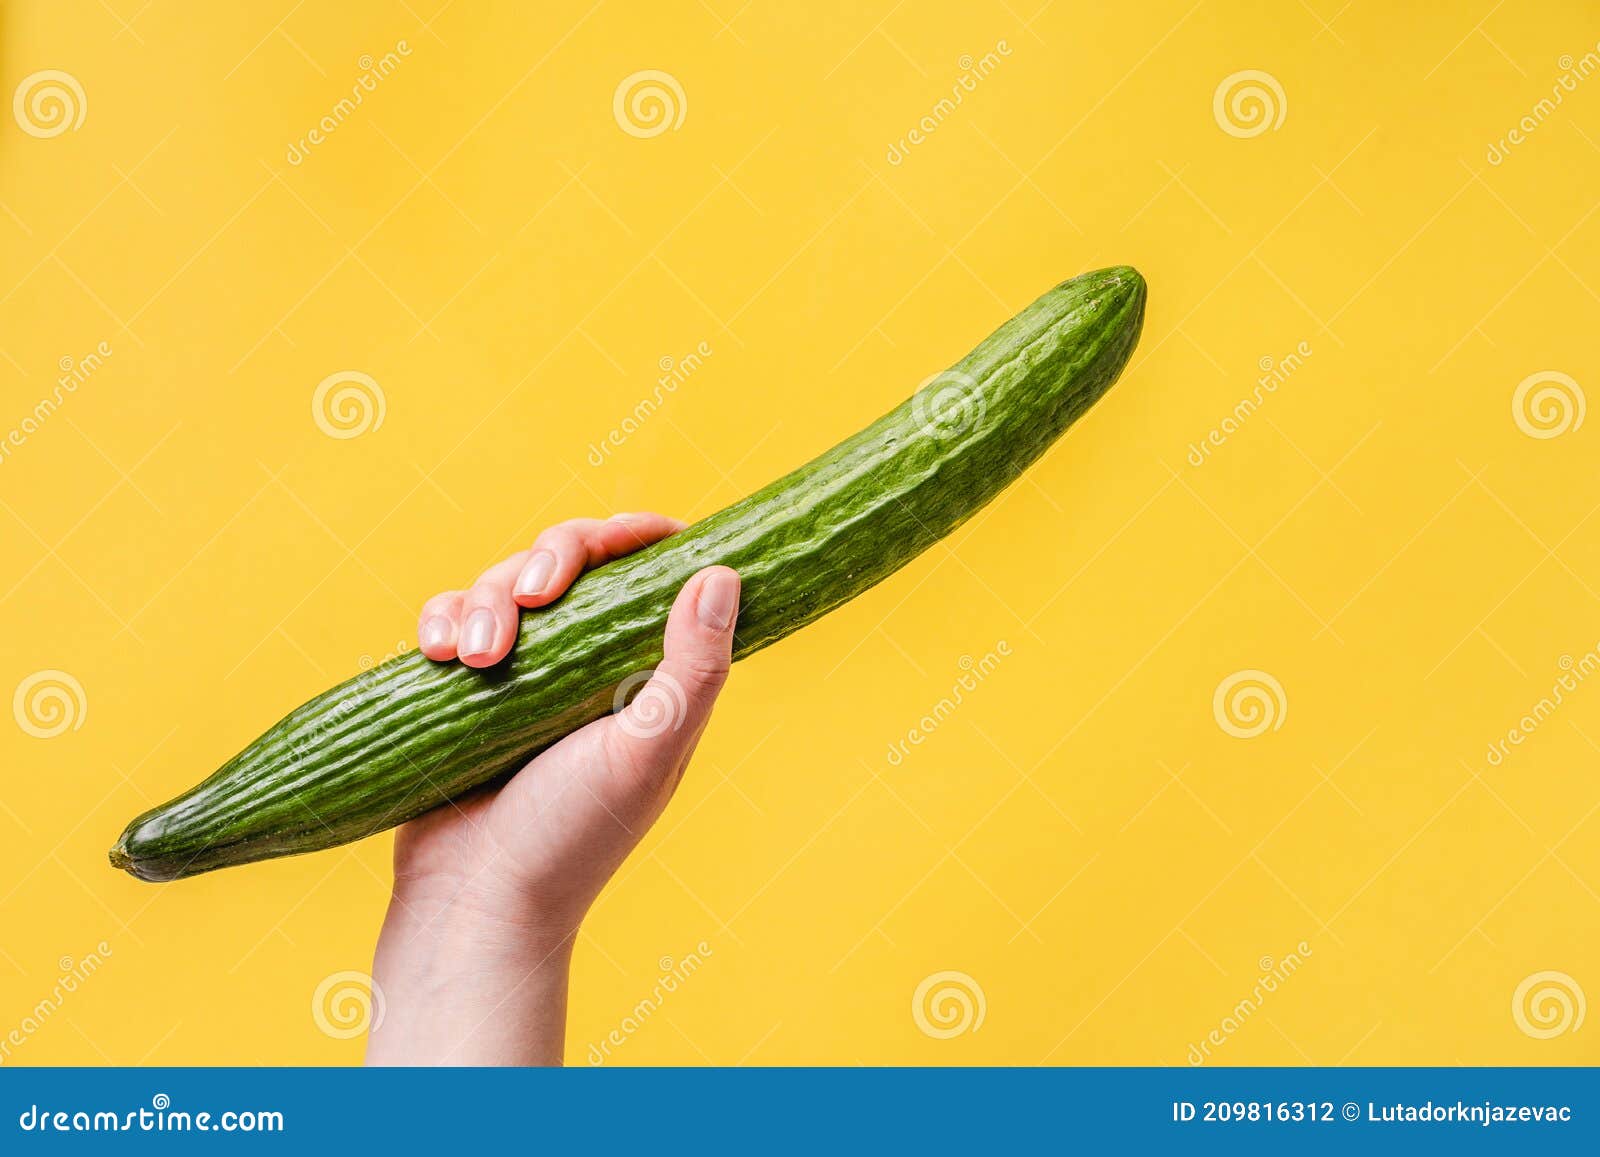 Sexy Woman Cucumber Stock Photos pic